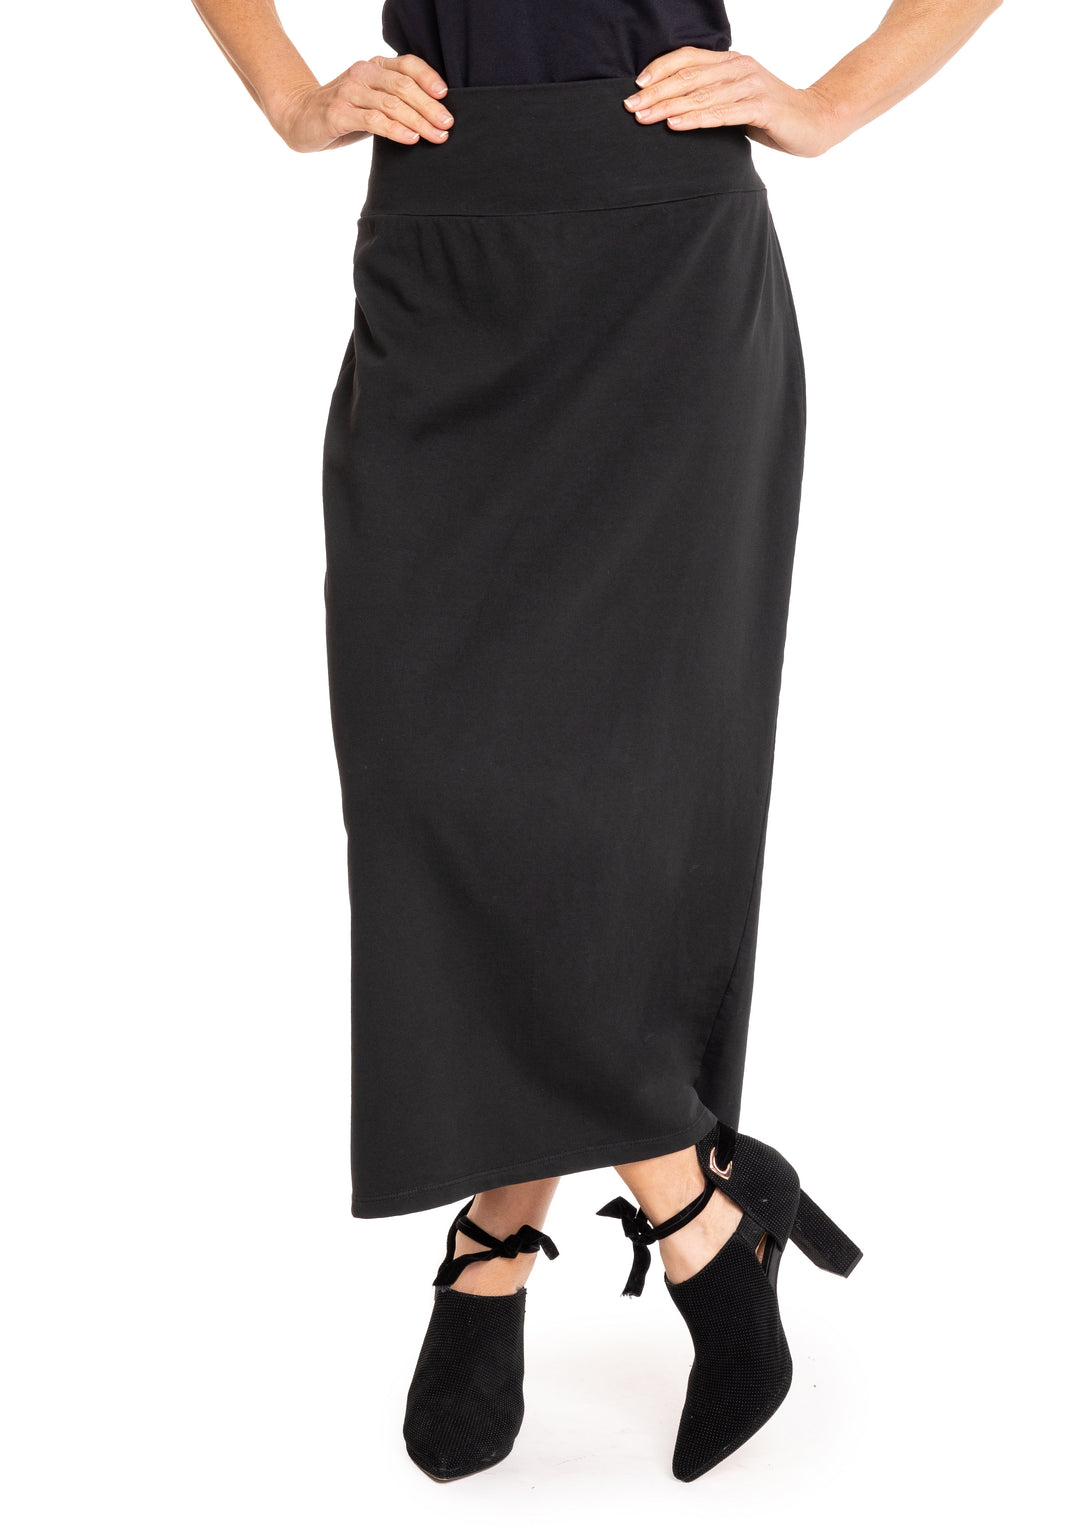 Carina Skirt in Onyx - Imagine Fashion